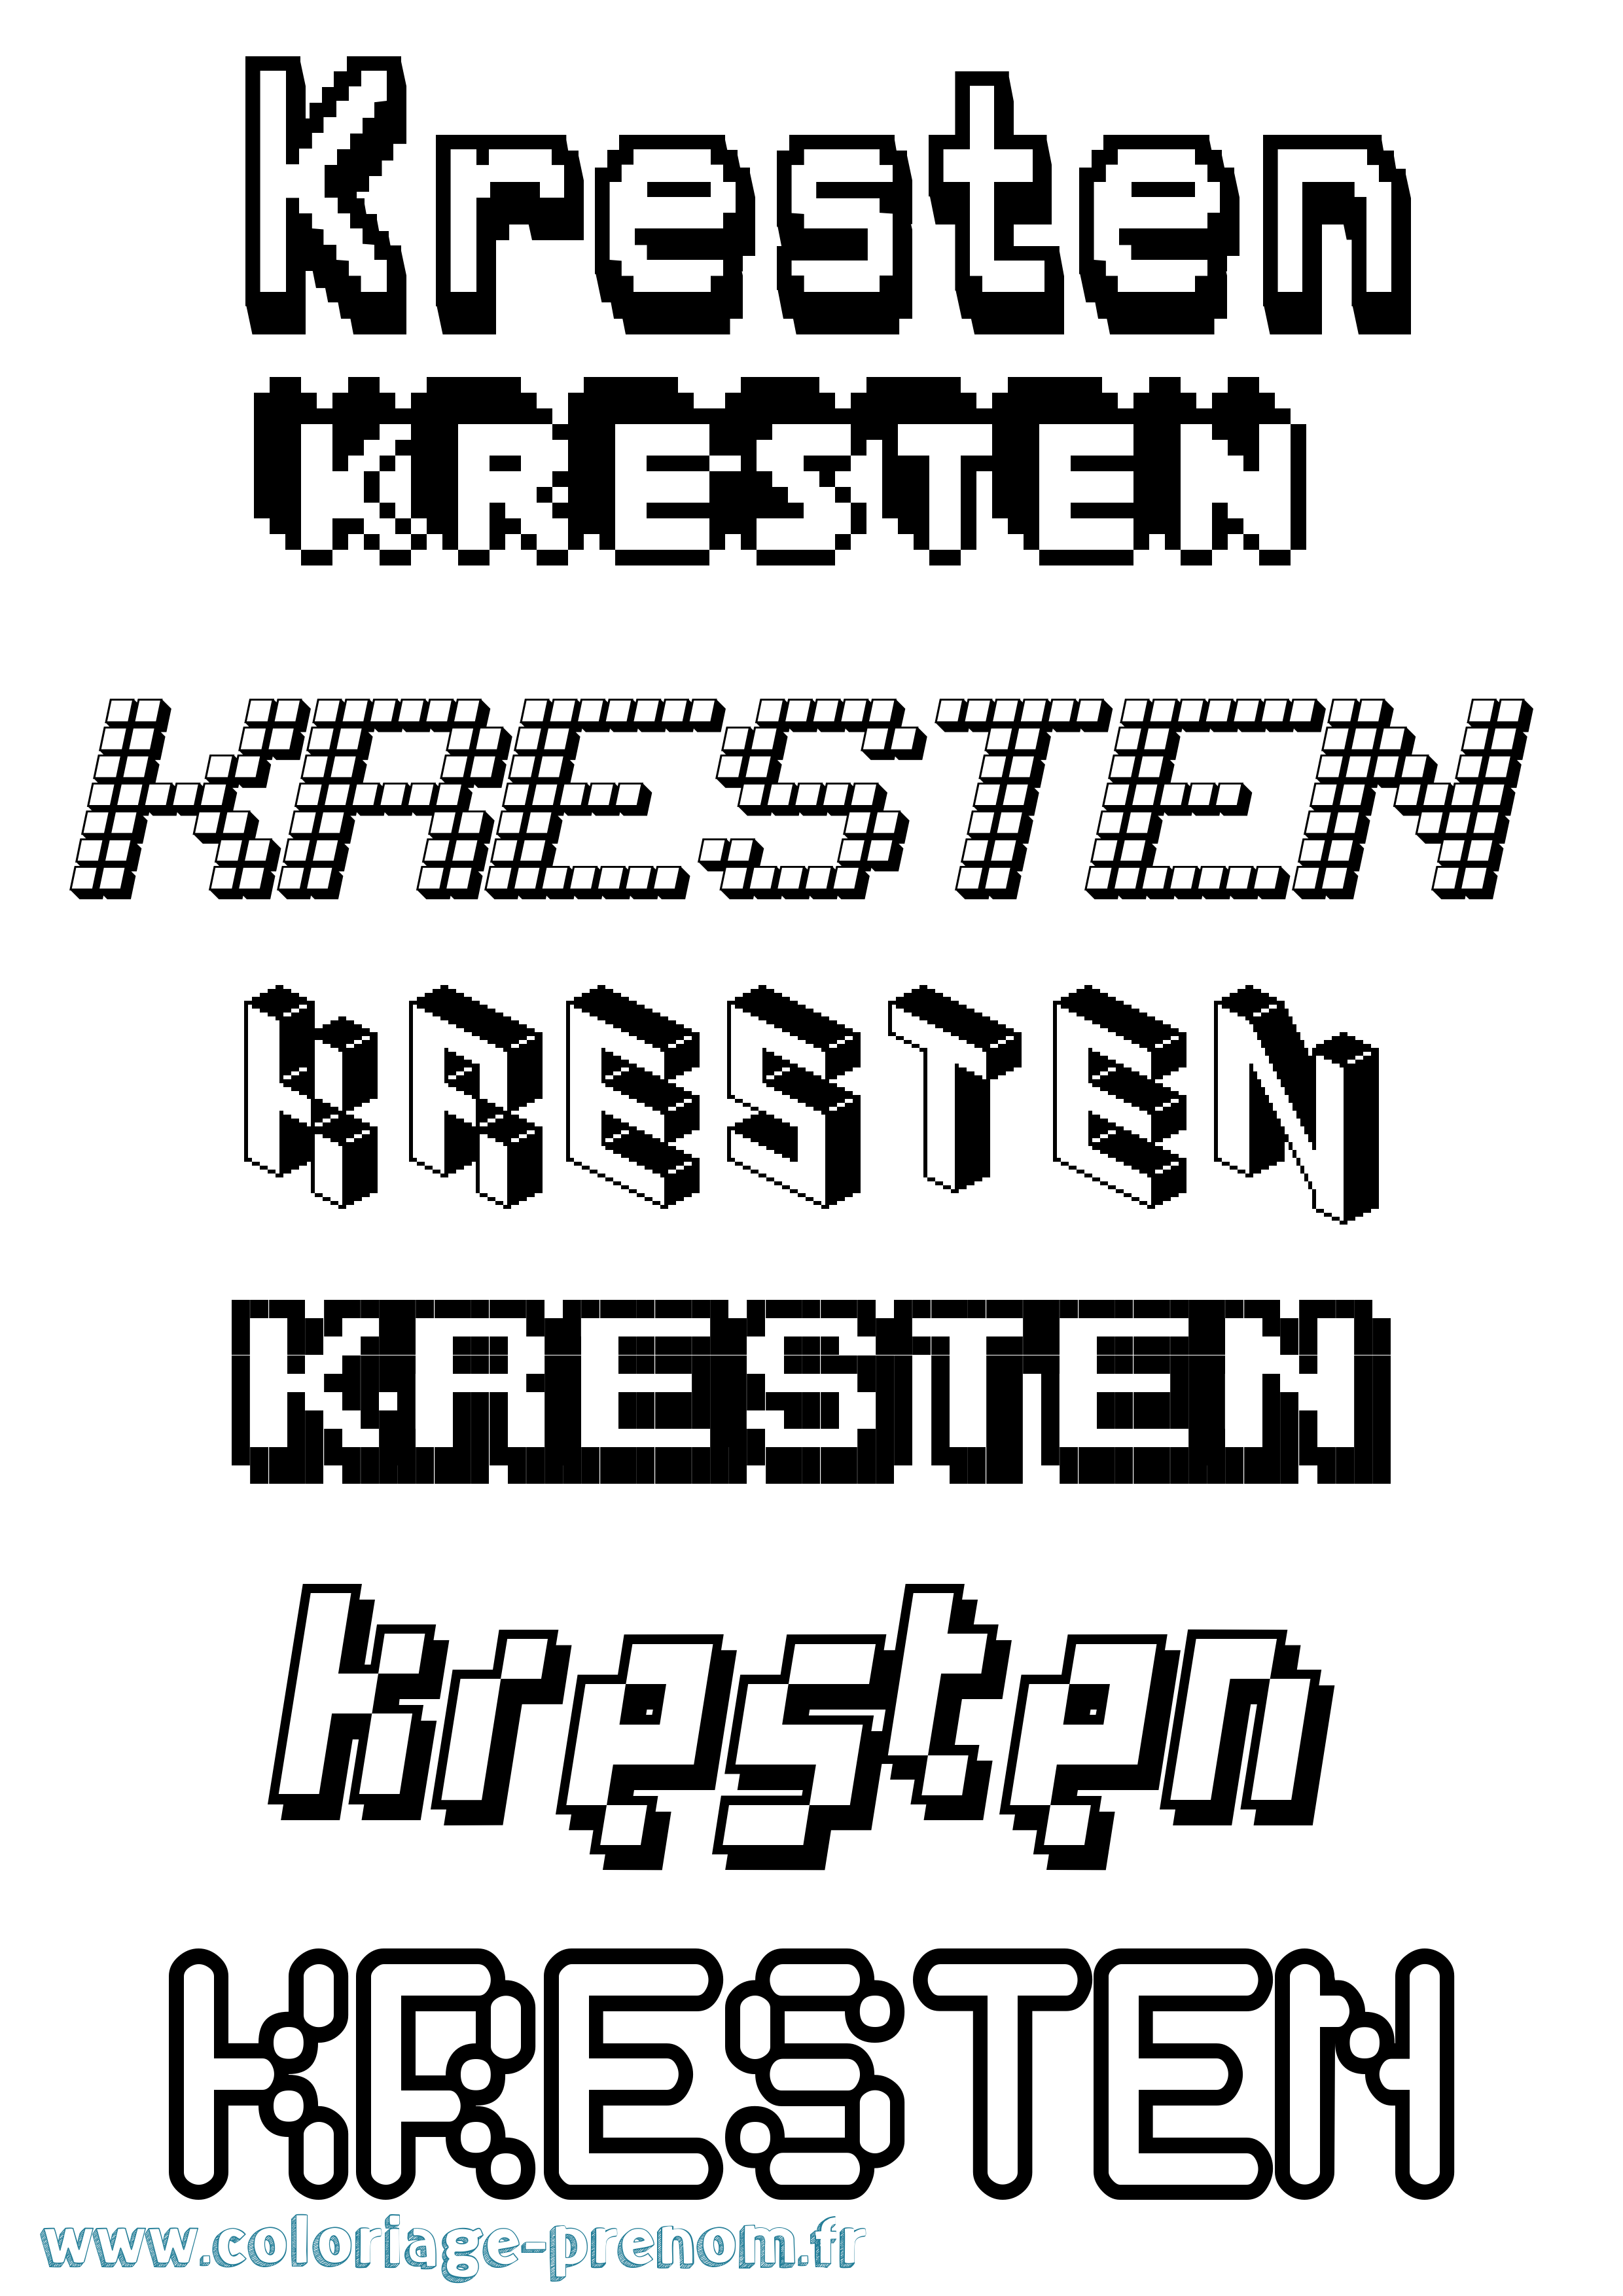 Coloriage prénom Kresten Pixel